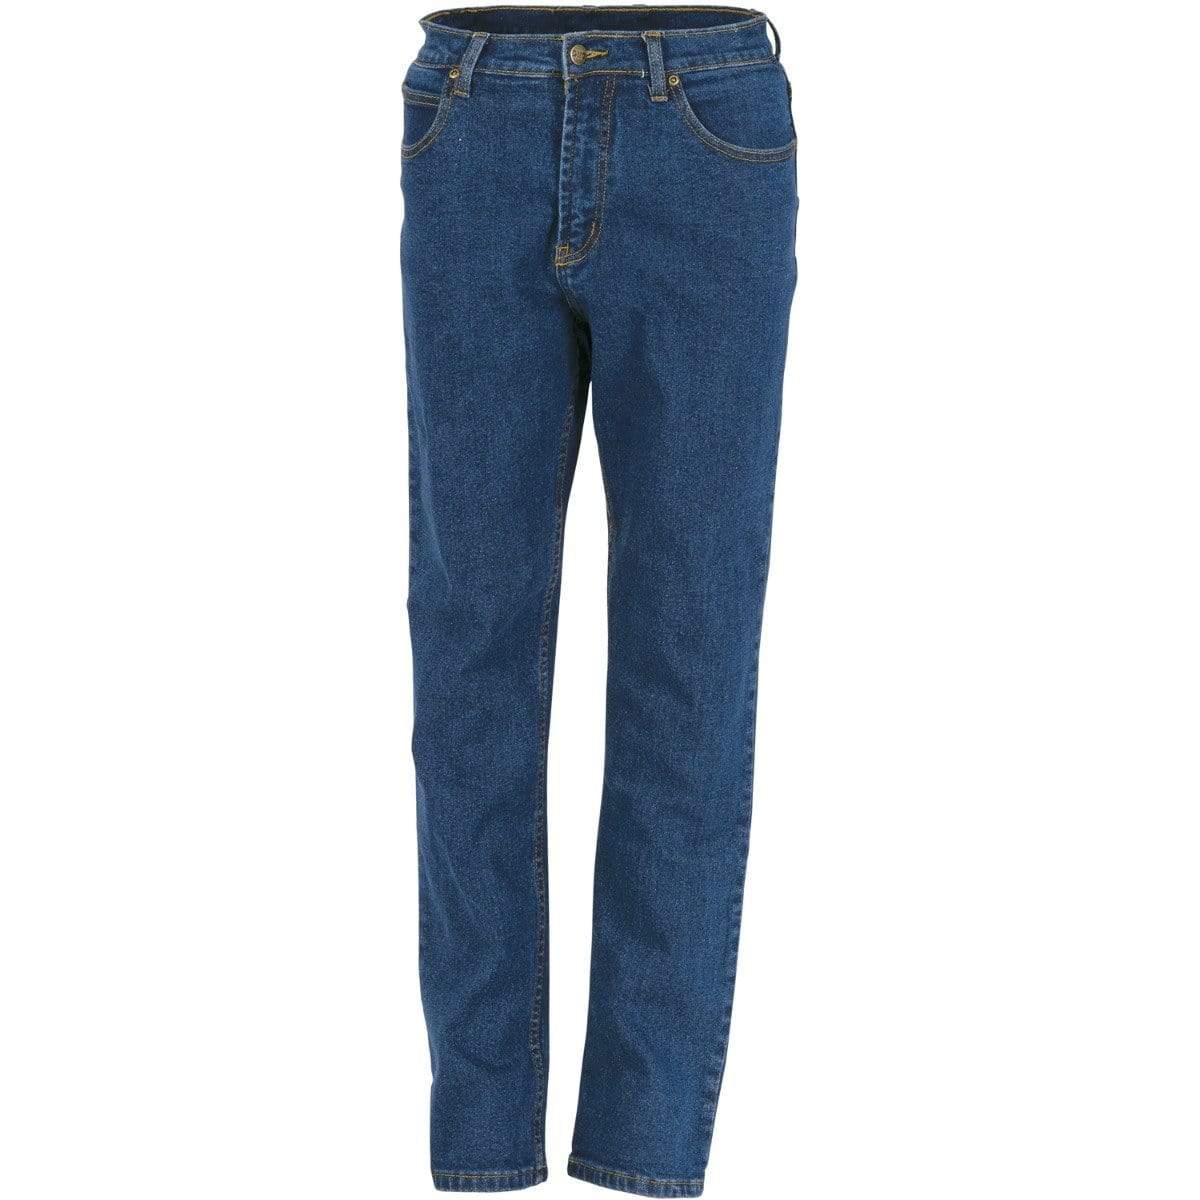 Dnc Workwear Ladies Denim Stretch Jeans - 3338 Work Wear DNC Workwear Blue 8 